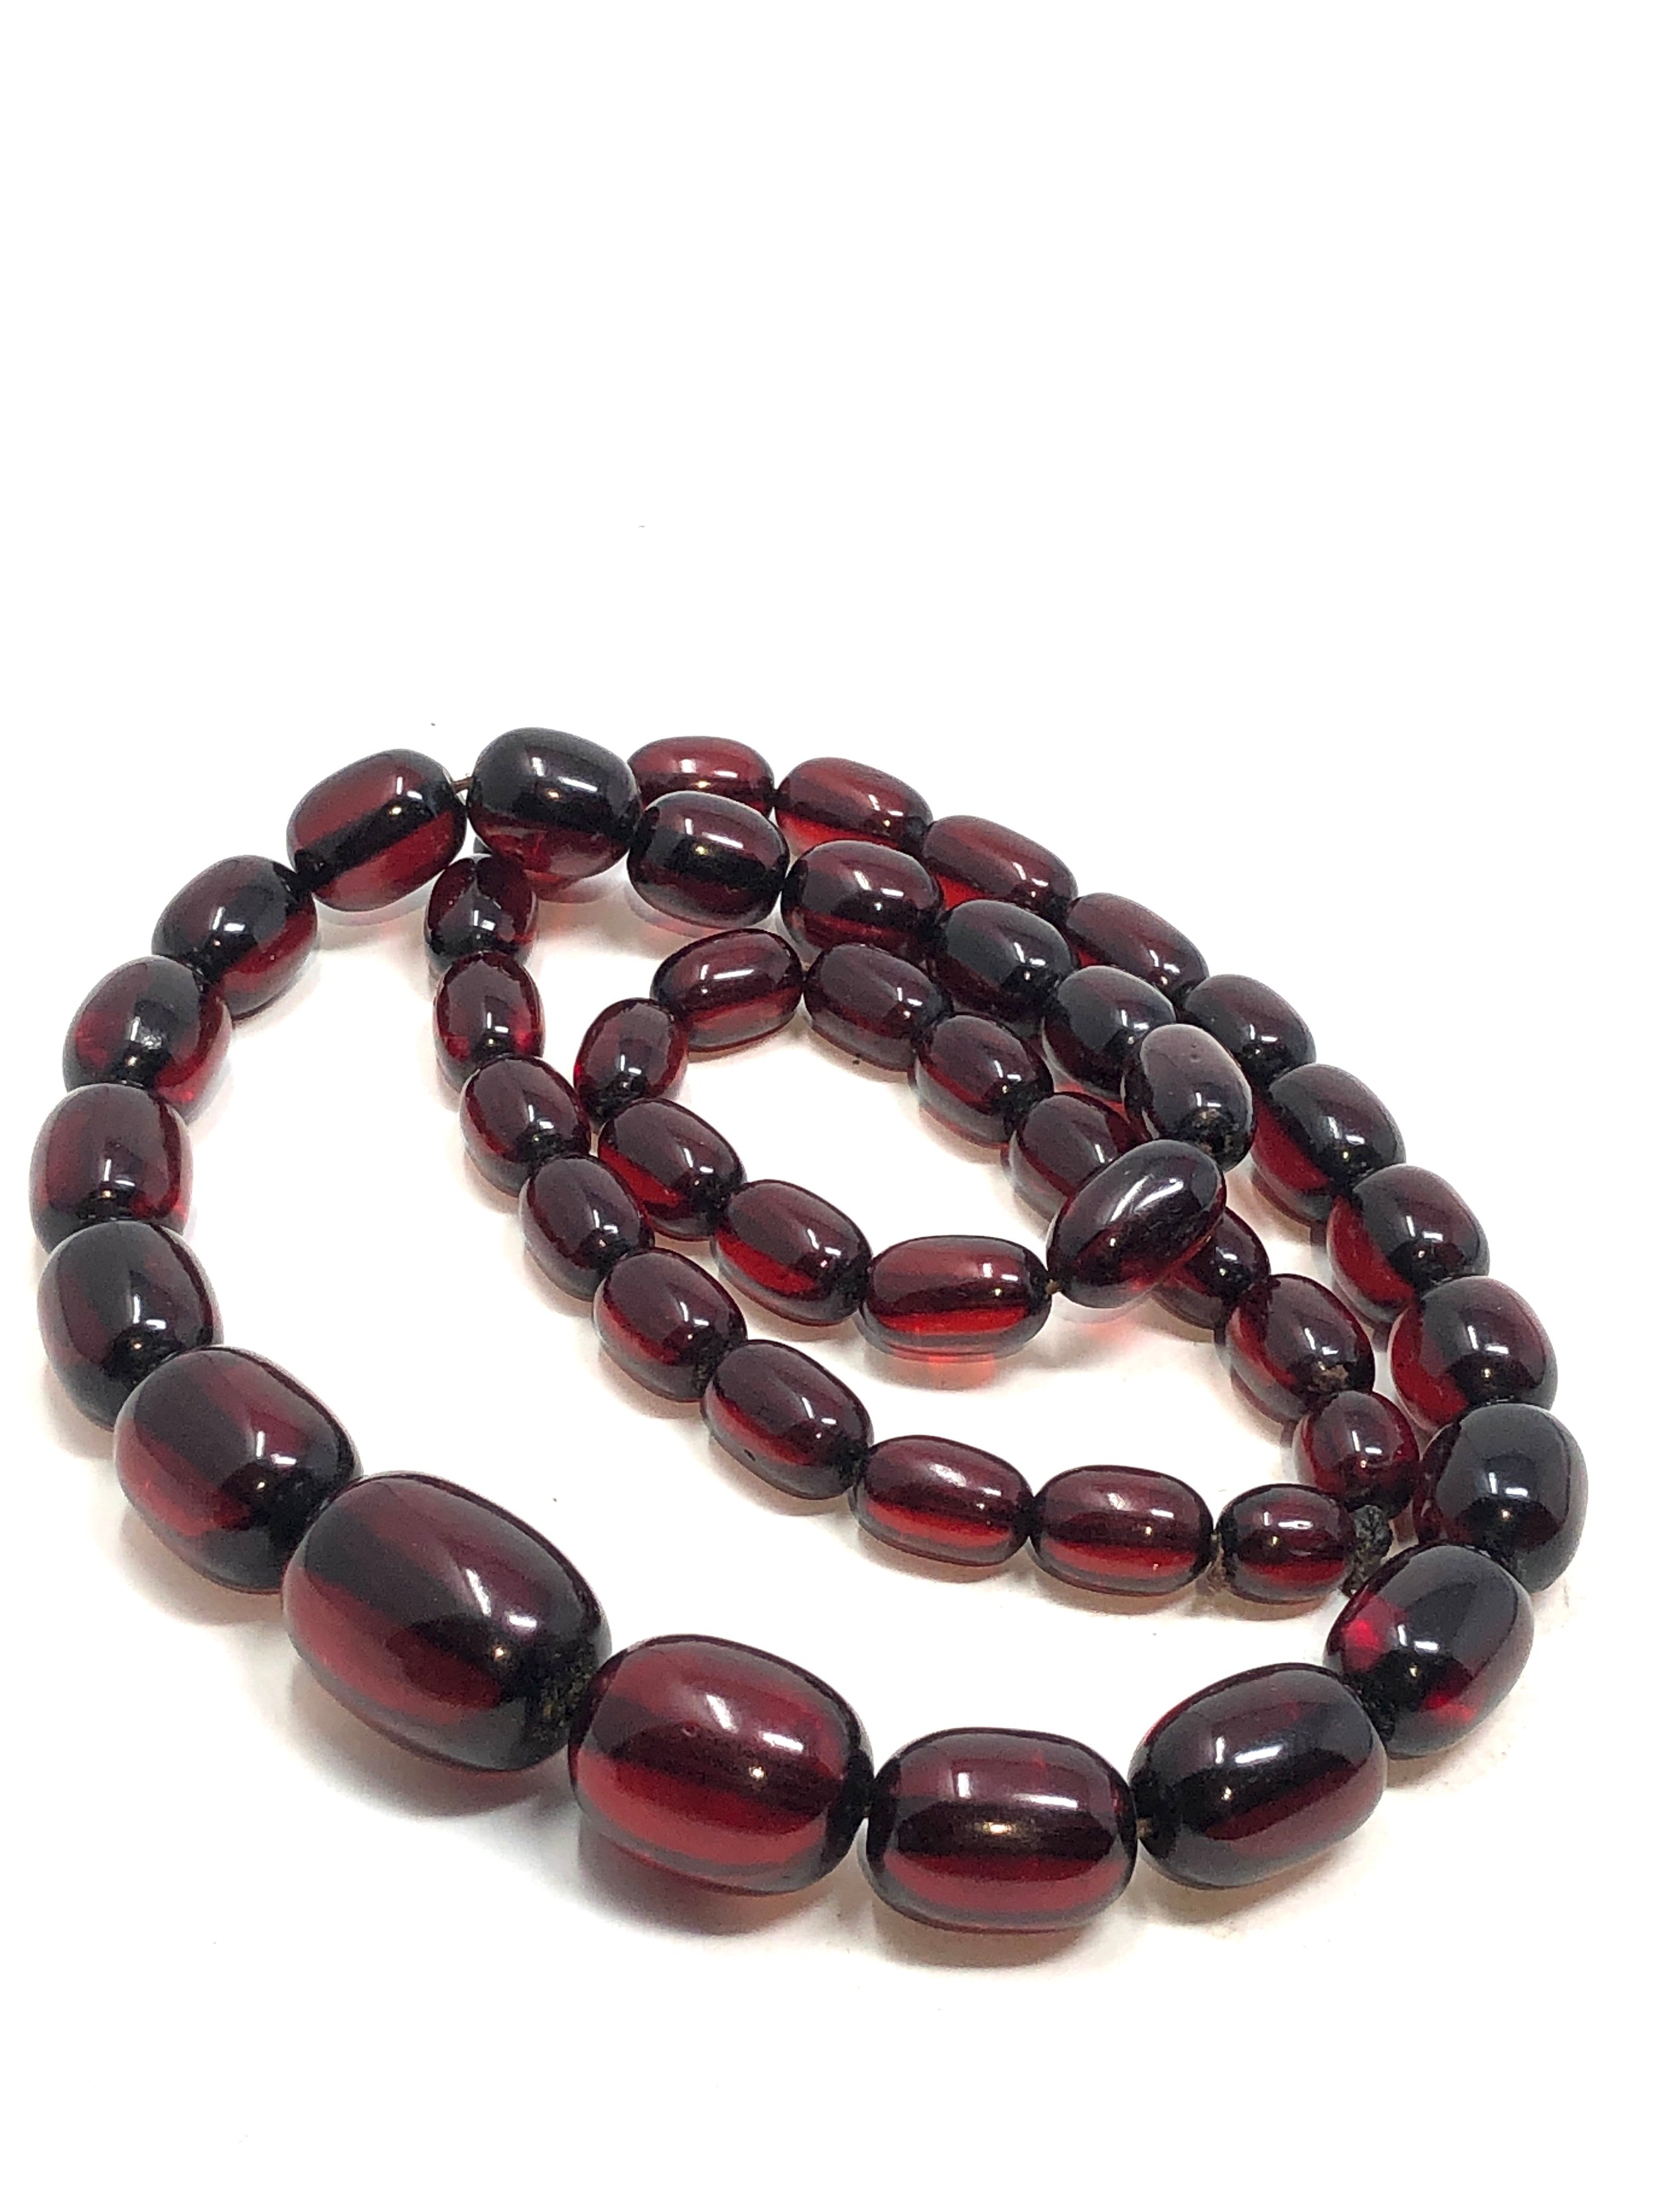 Antique prystal cherry bakelite bead graduated necklace (107g)